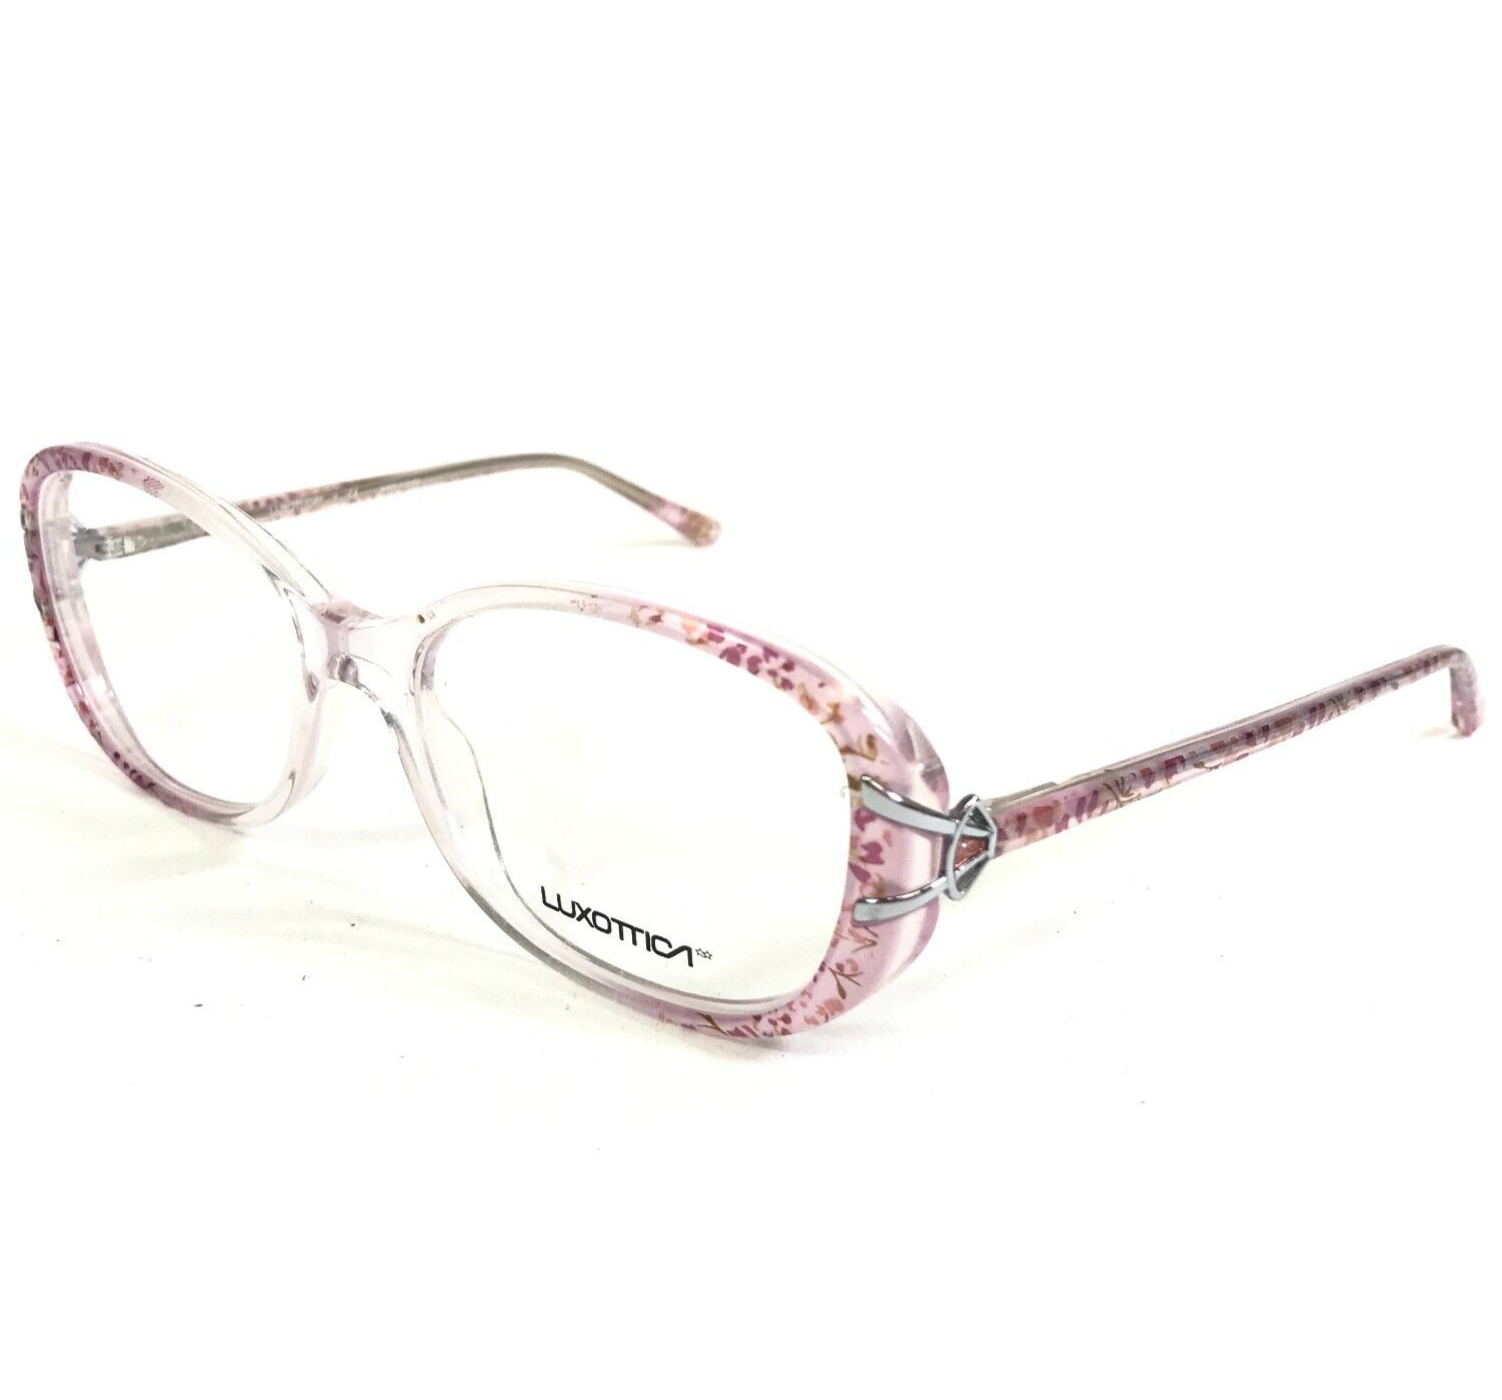 Luxottica Eyeglasses Frames LU 4339 C545 Clear Purple Pink Silver 51-16-135 - $27.84